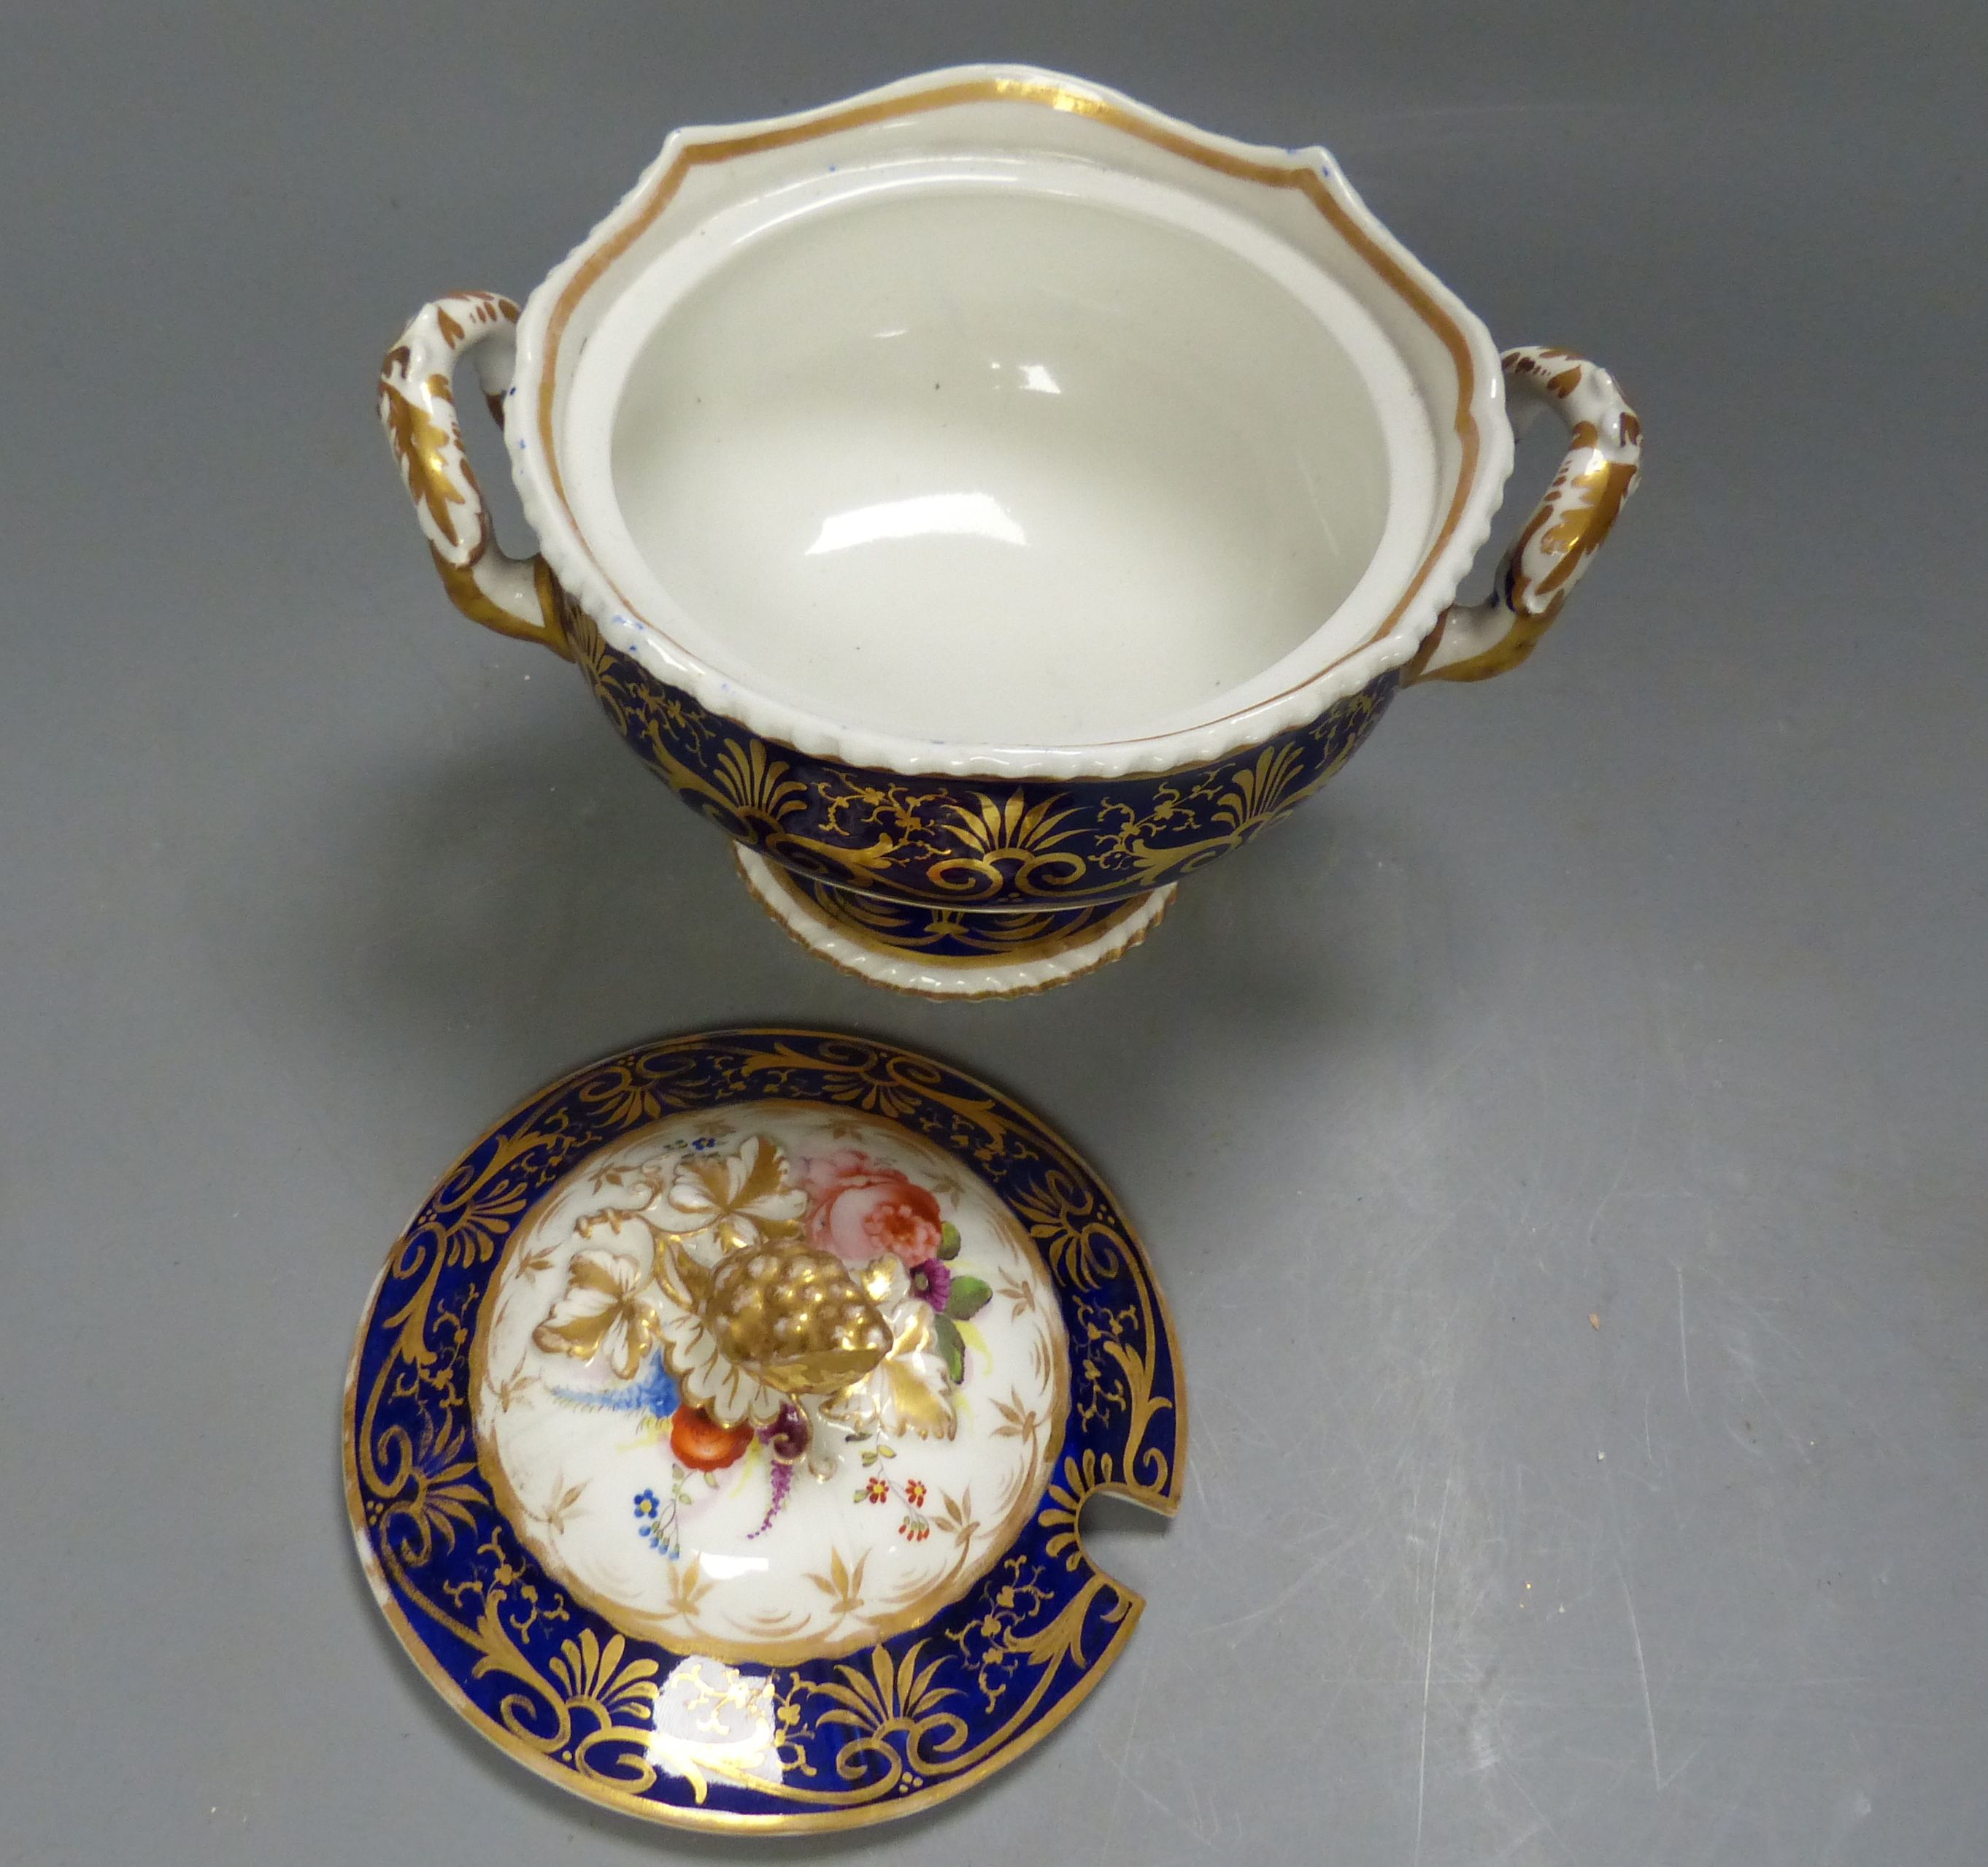 A group of English porcelain blue ground dessert wares, some damage, c.1825